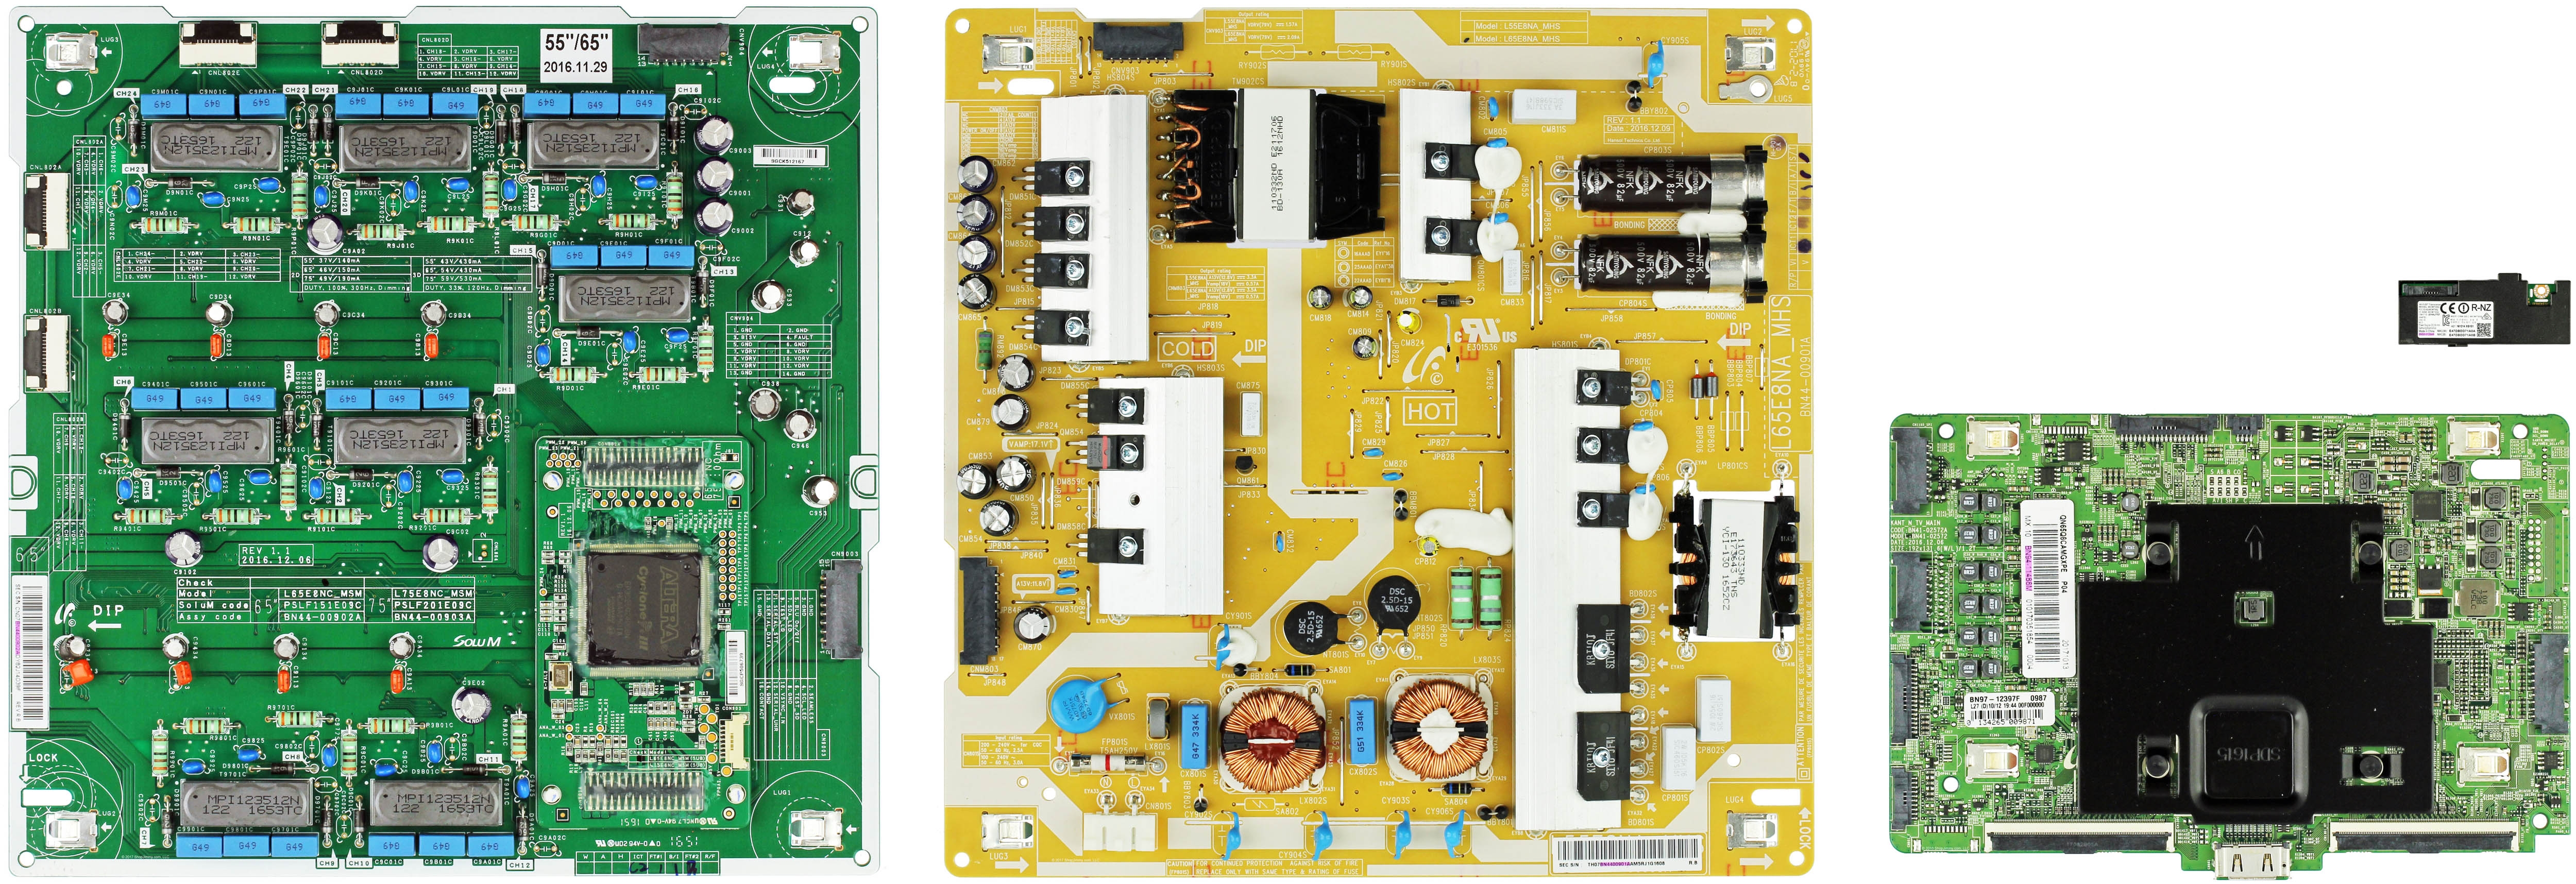 Samsung QN65Q7CDMFXZA (Version FA02) Complete LED TV Repair Parts Kit